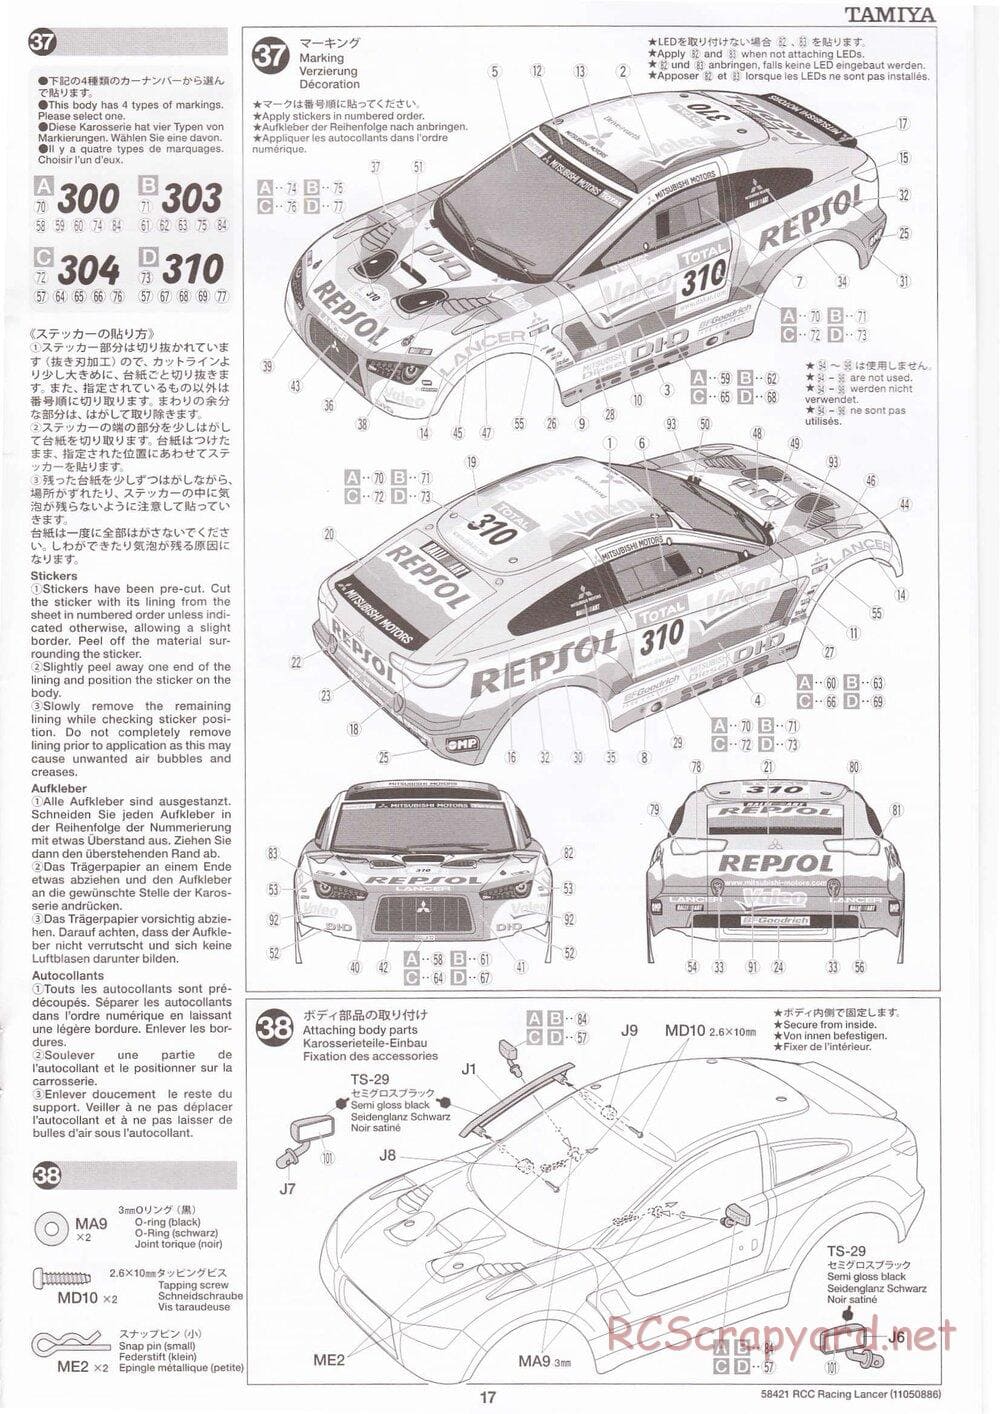 Tamiya - Mitsubishi Racing Lancer - DF-01 Chassis - Manual - Page 17